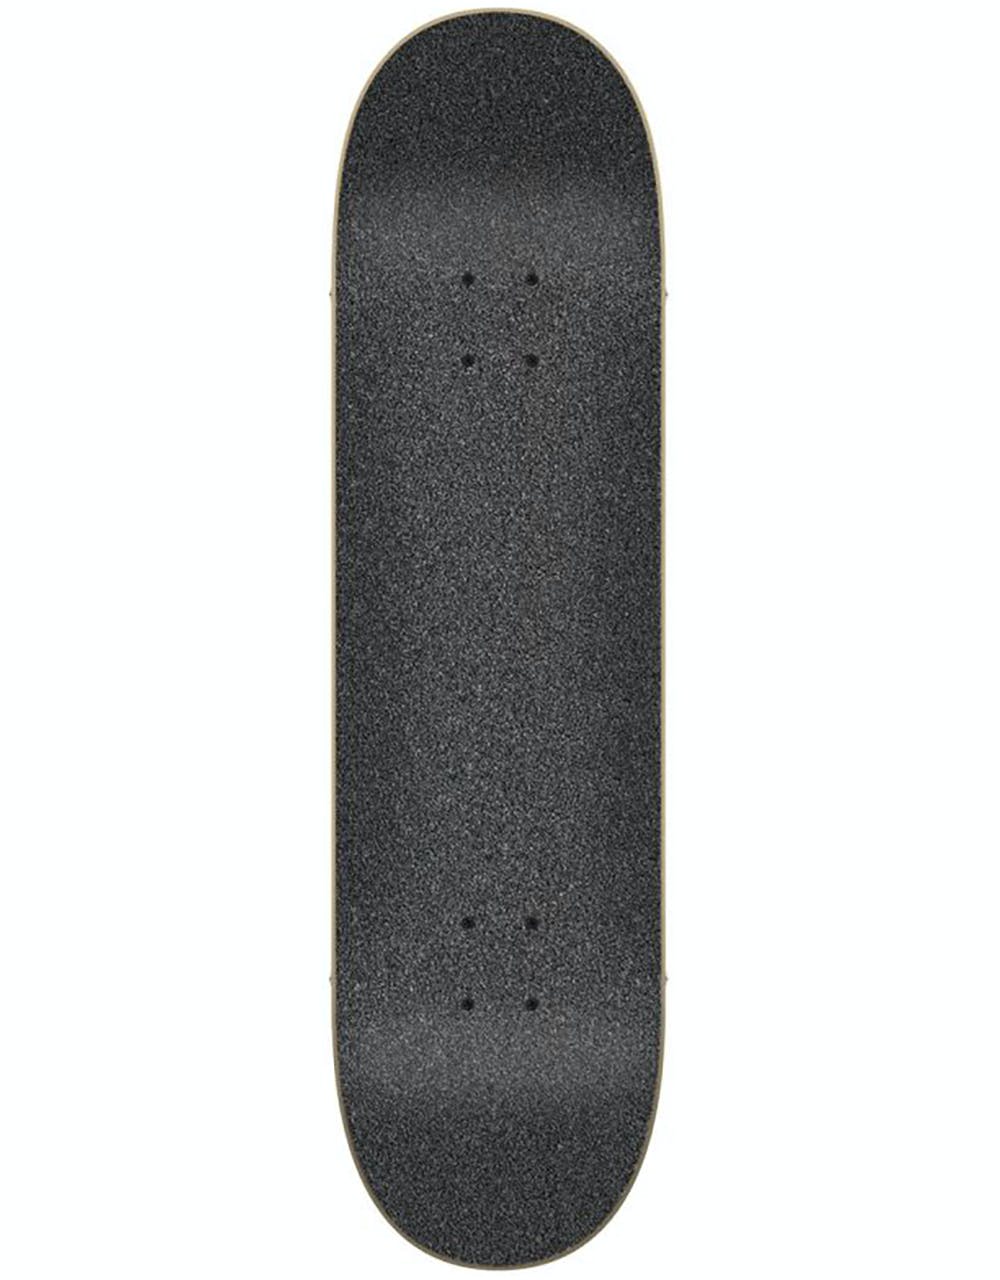 Flip HKD Complete Skateboard - 8.25"